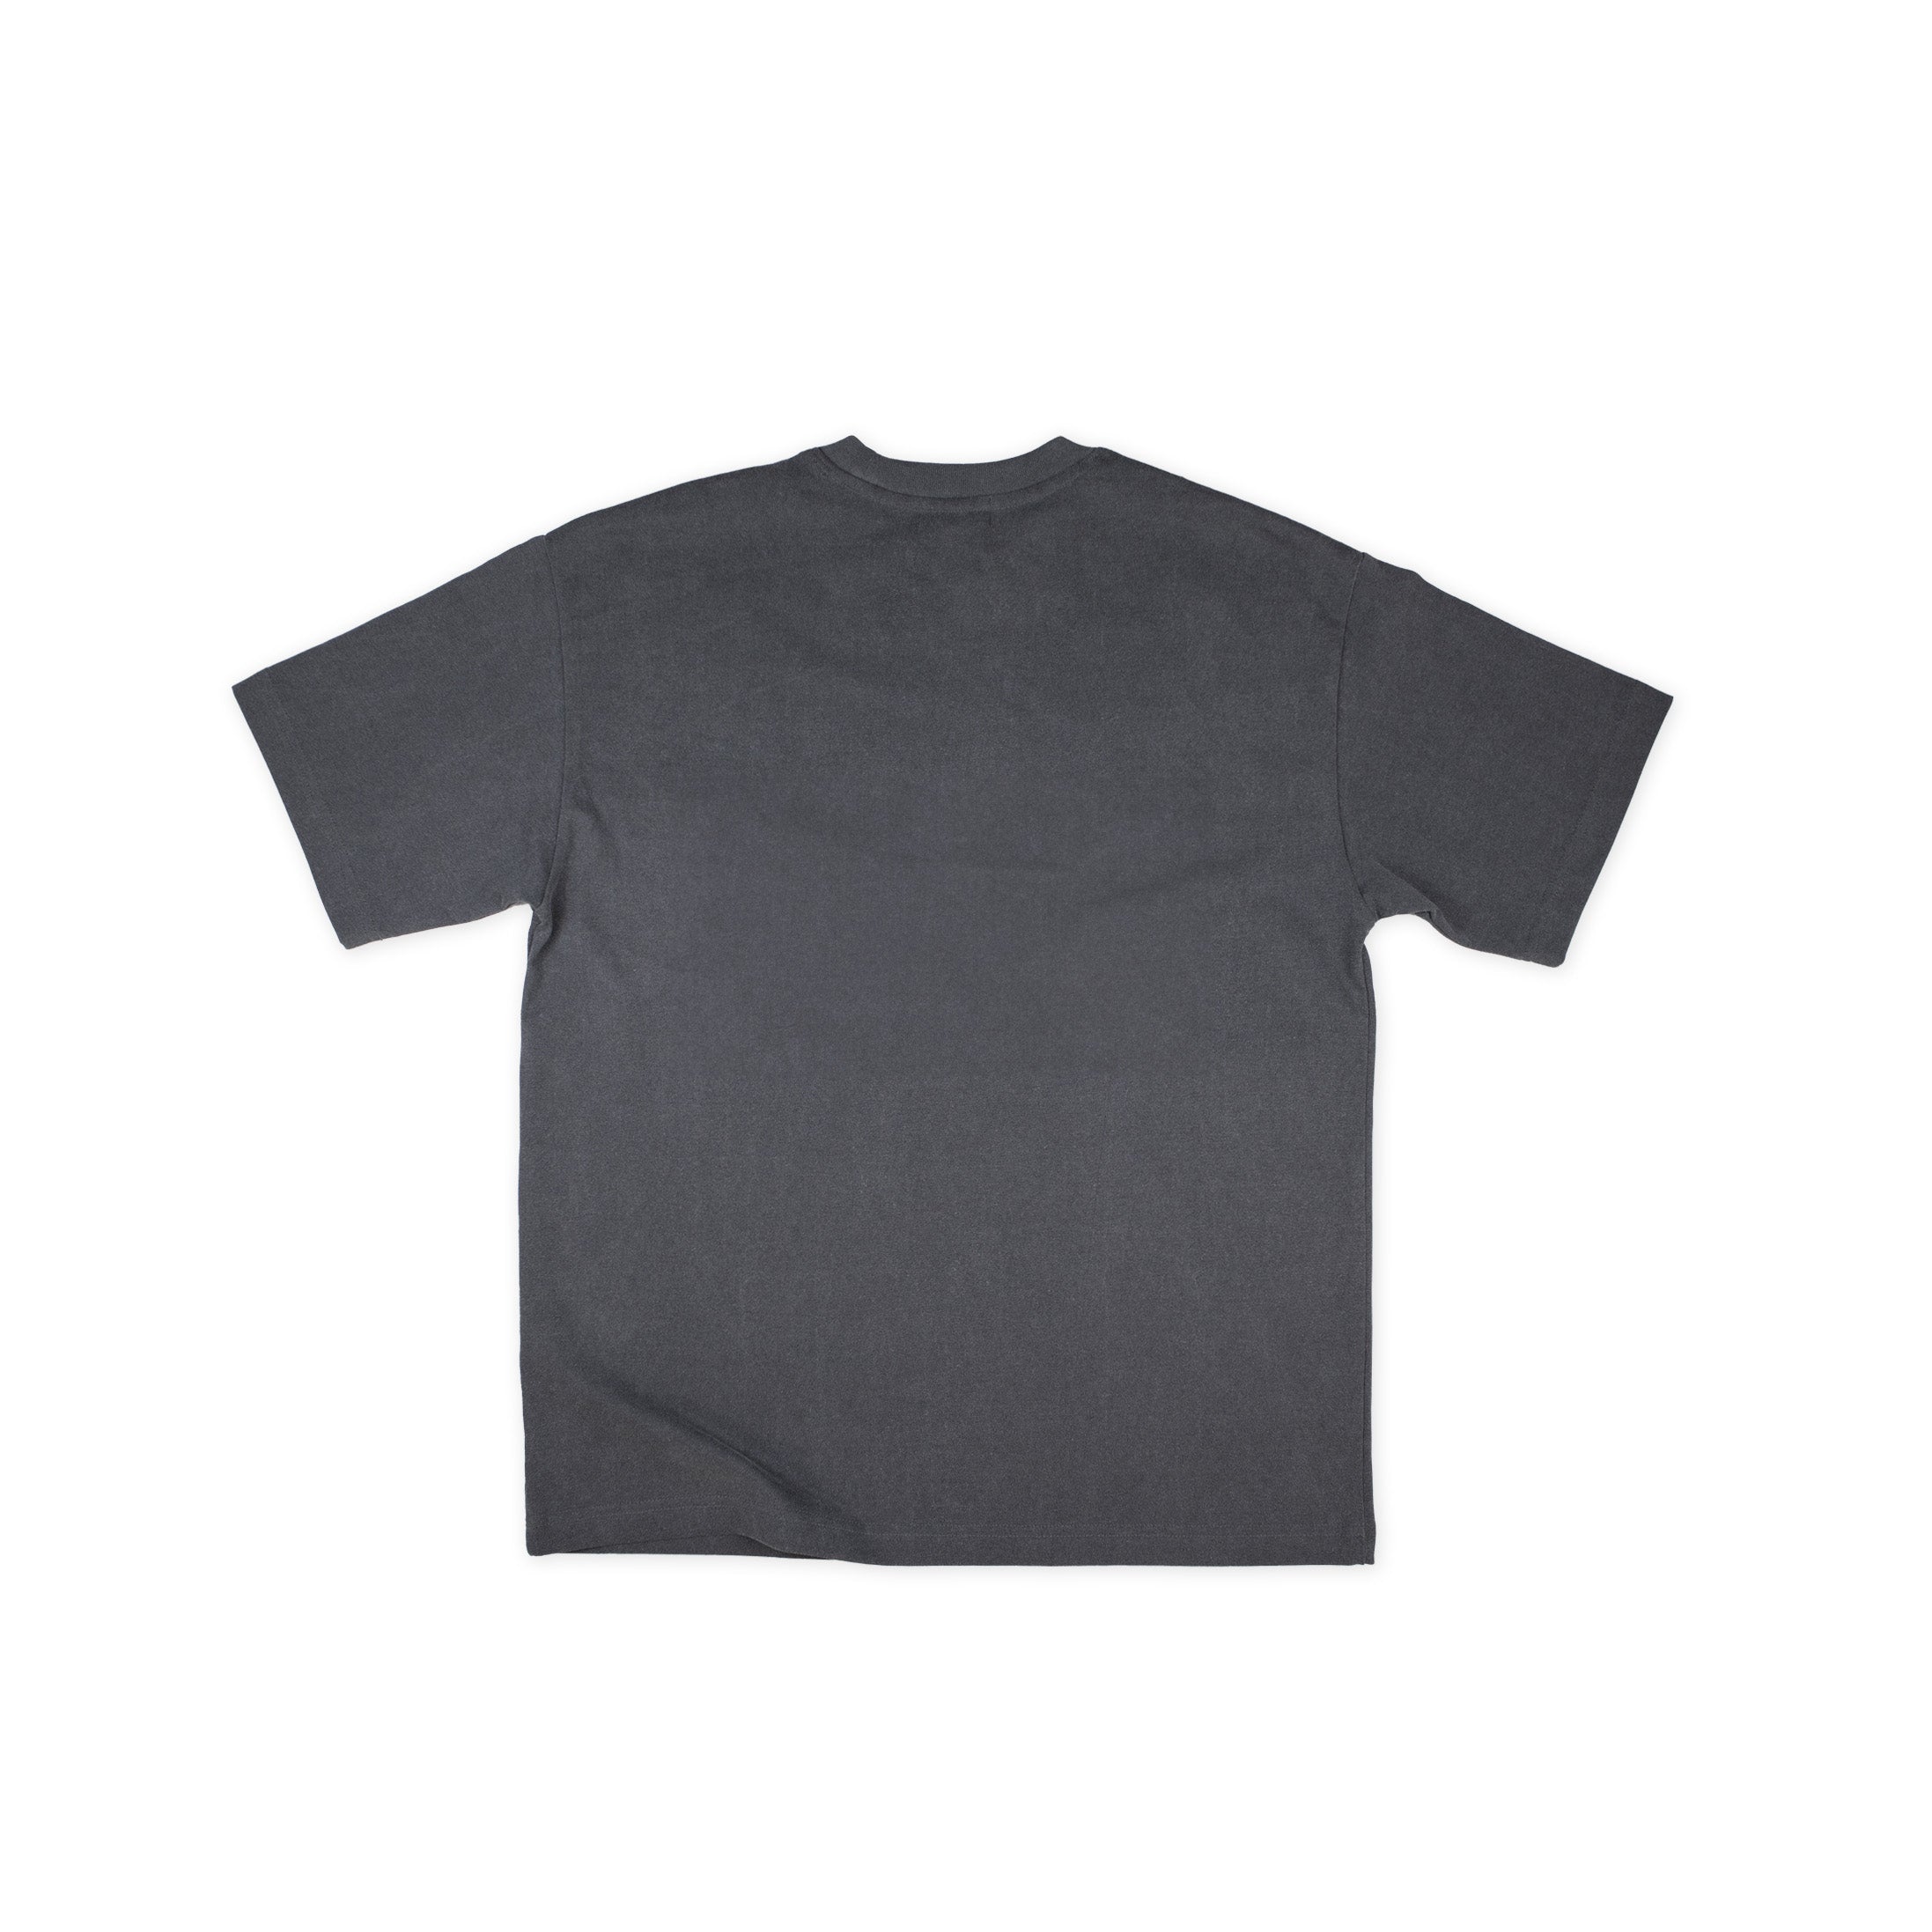 Essential Blank Vintage T-Shirt - KARTEL